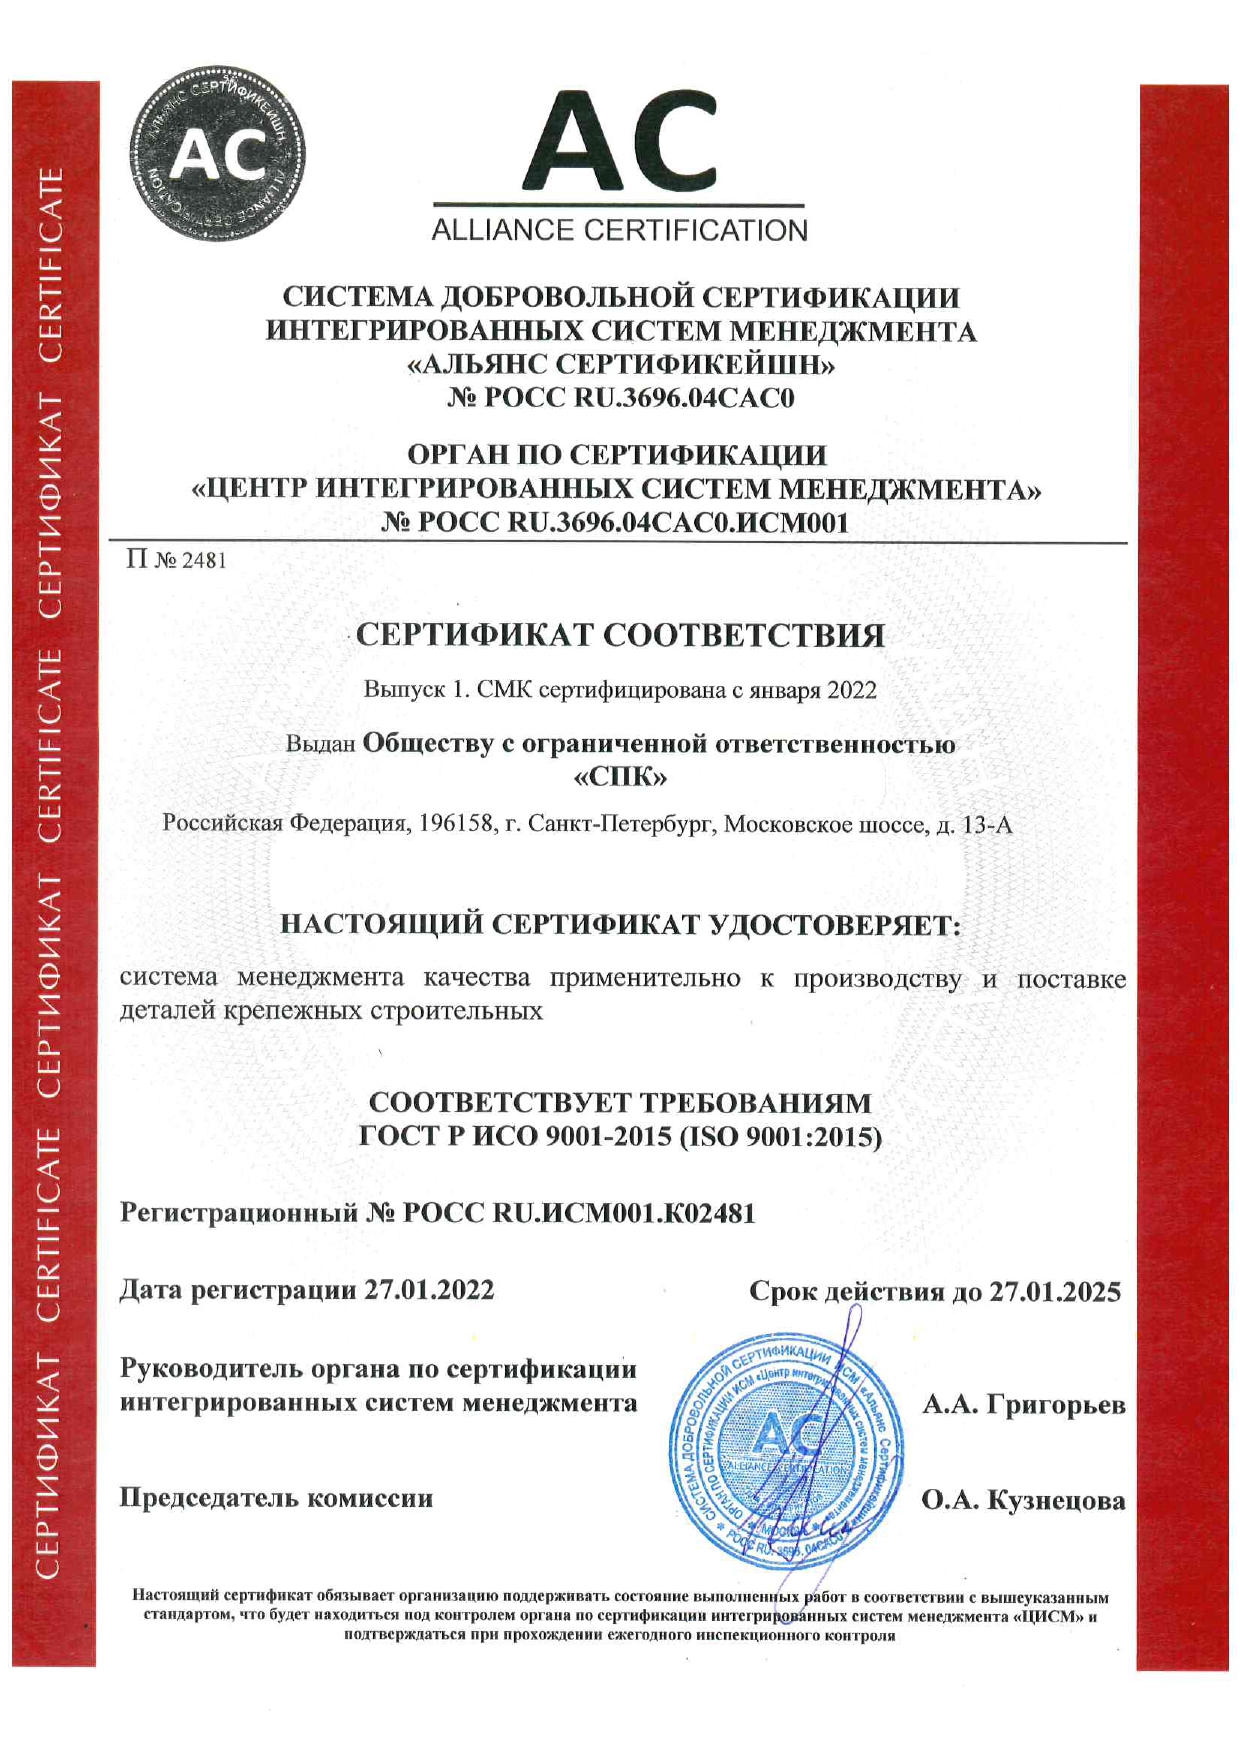 Сертификат соответствия ГОСТ Р ИСО 9001-2015 (ISO 9001:20015)